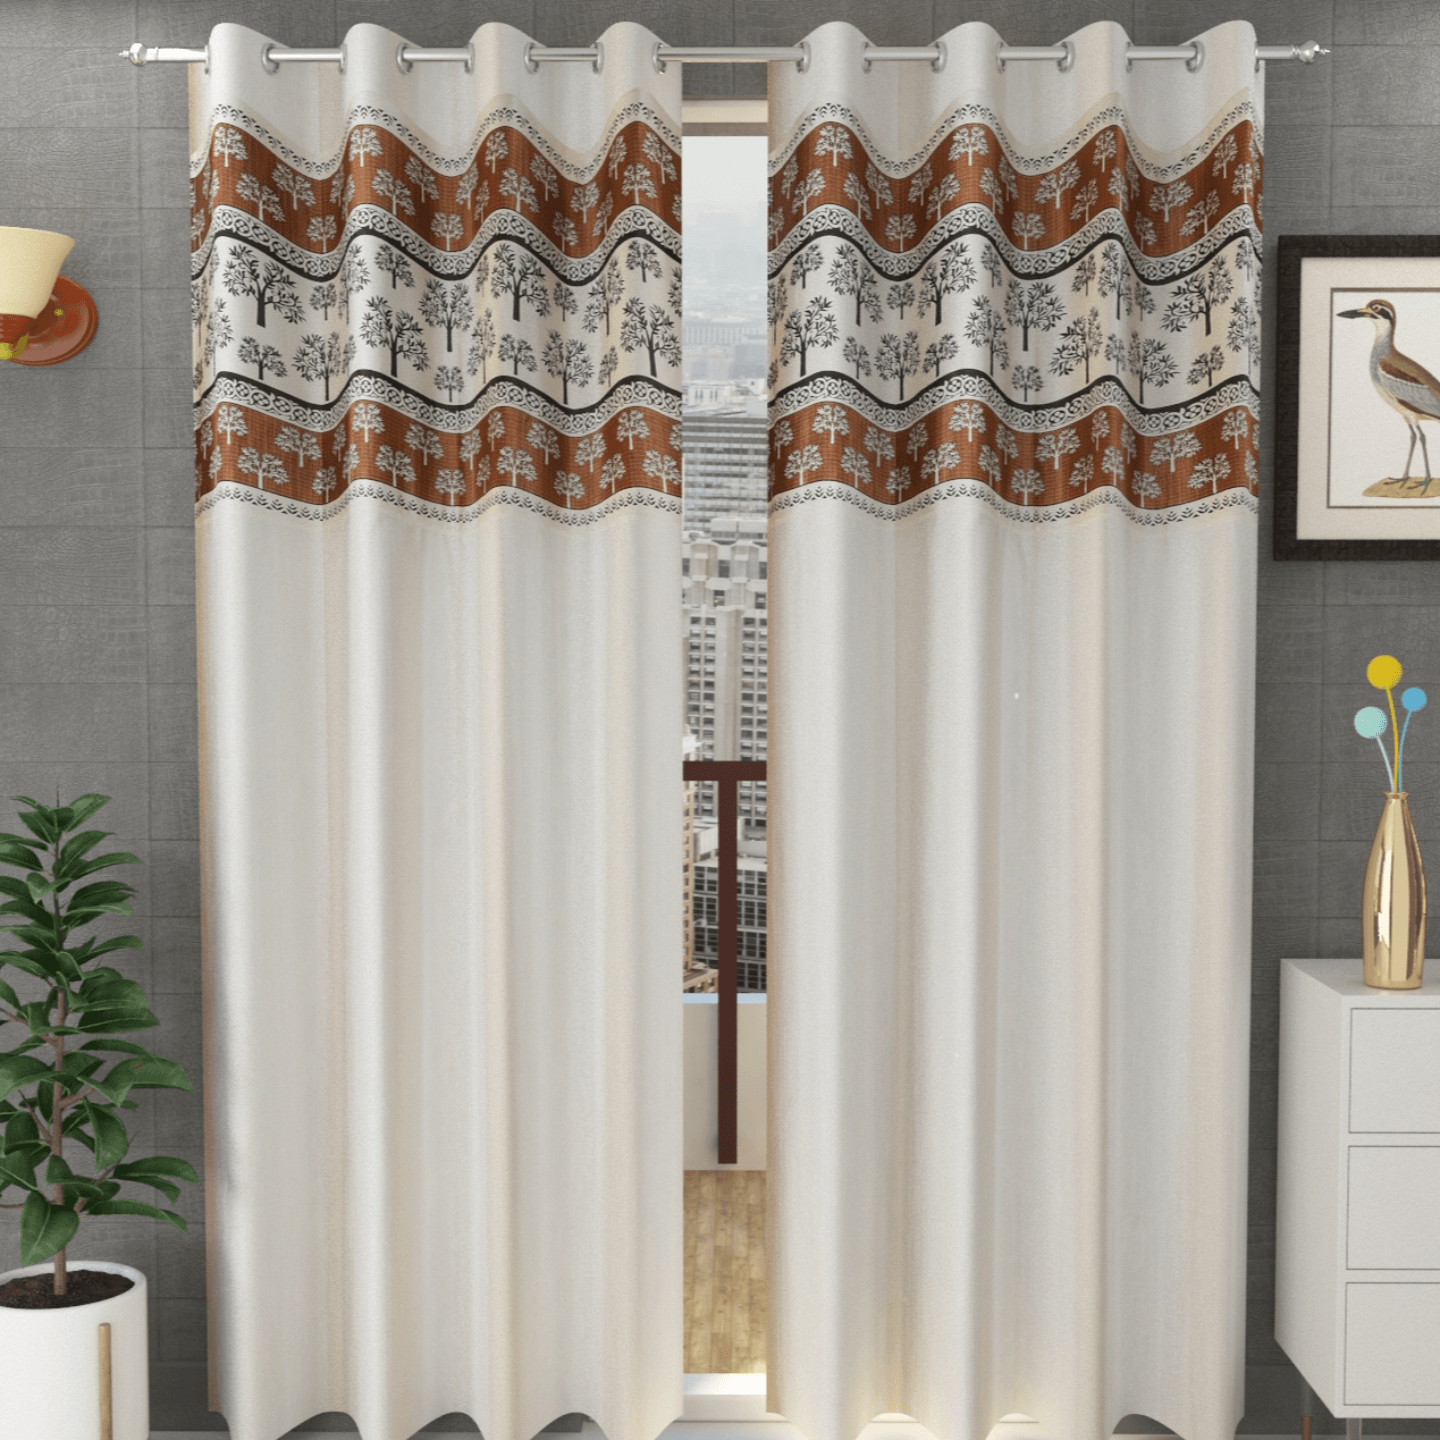 Handtex Home Tree design Patchwork curtain for door 9 feet set of 2pc Cream color